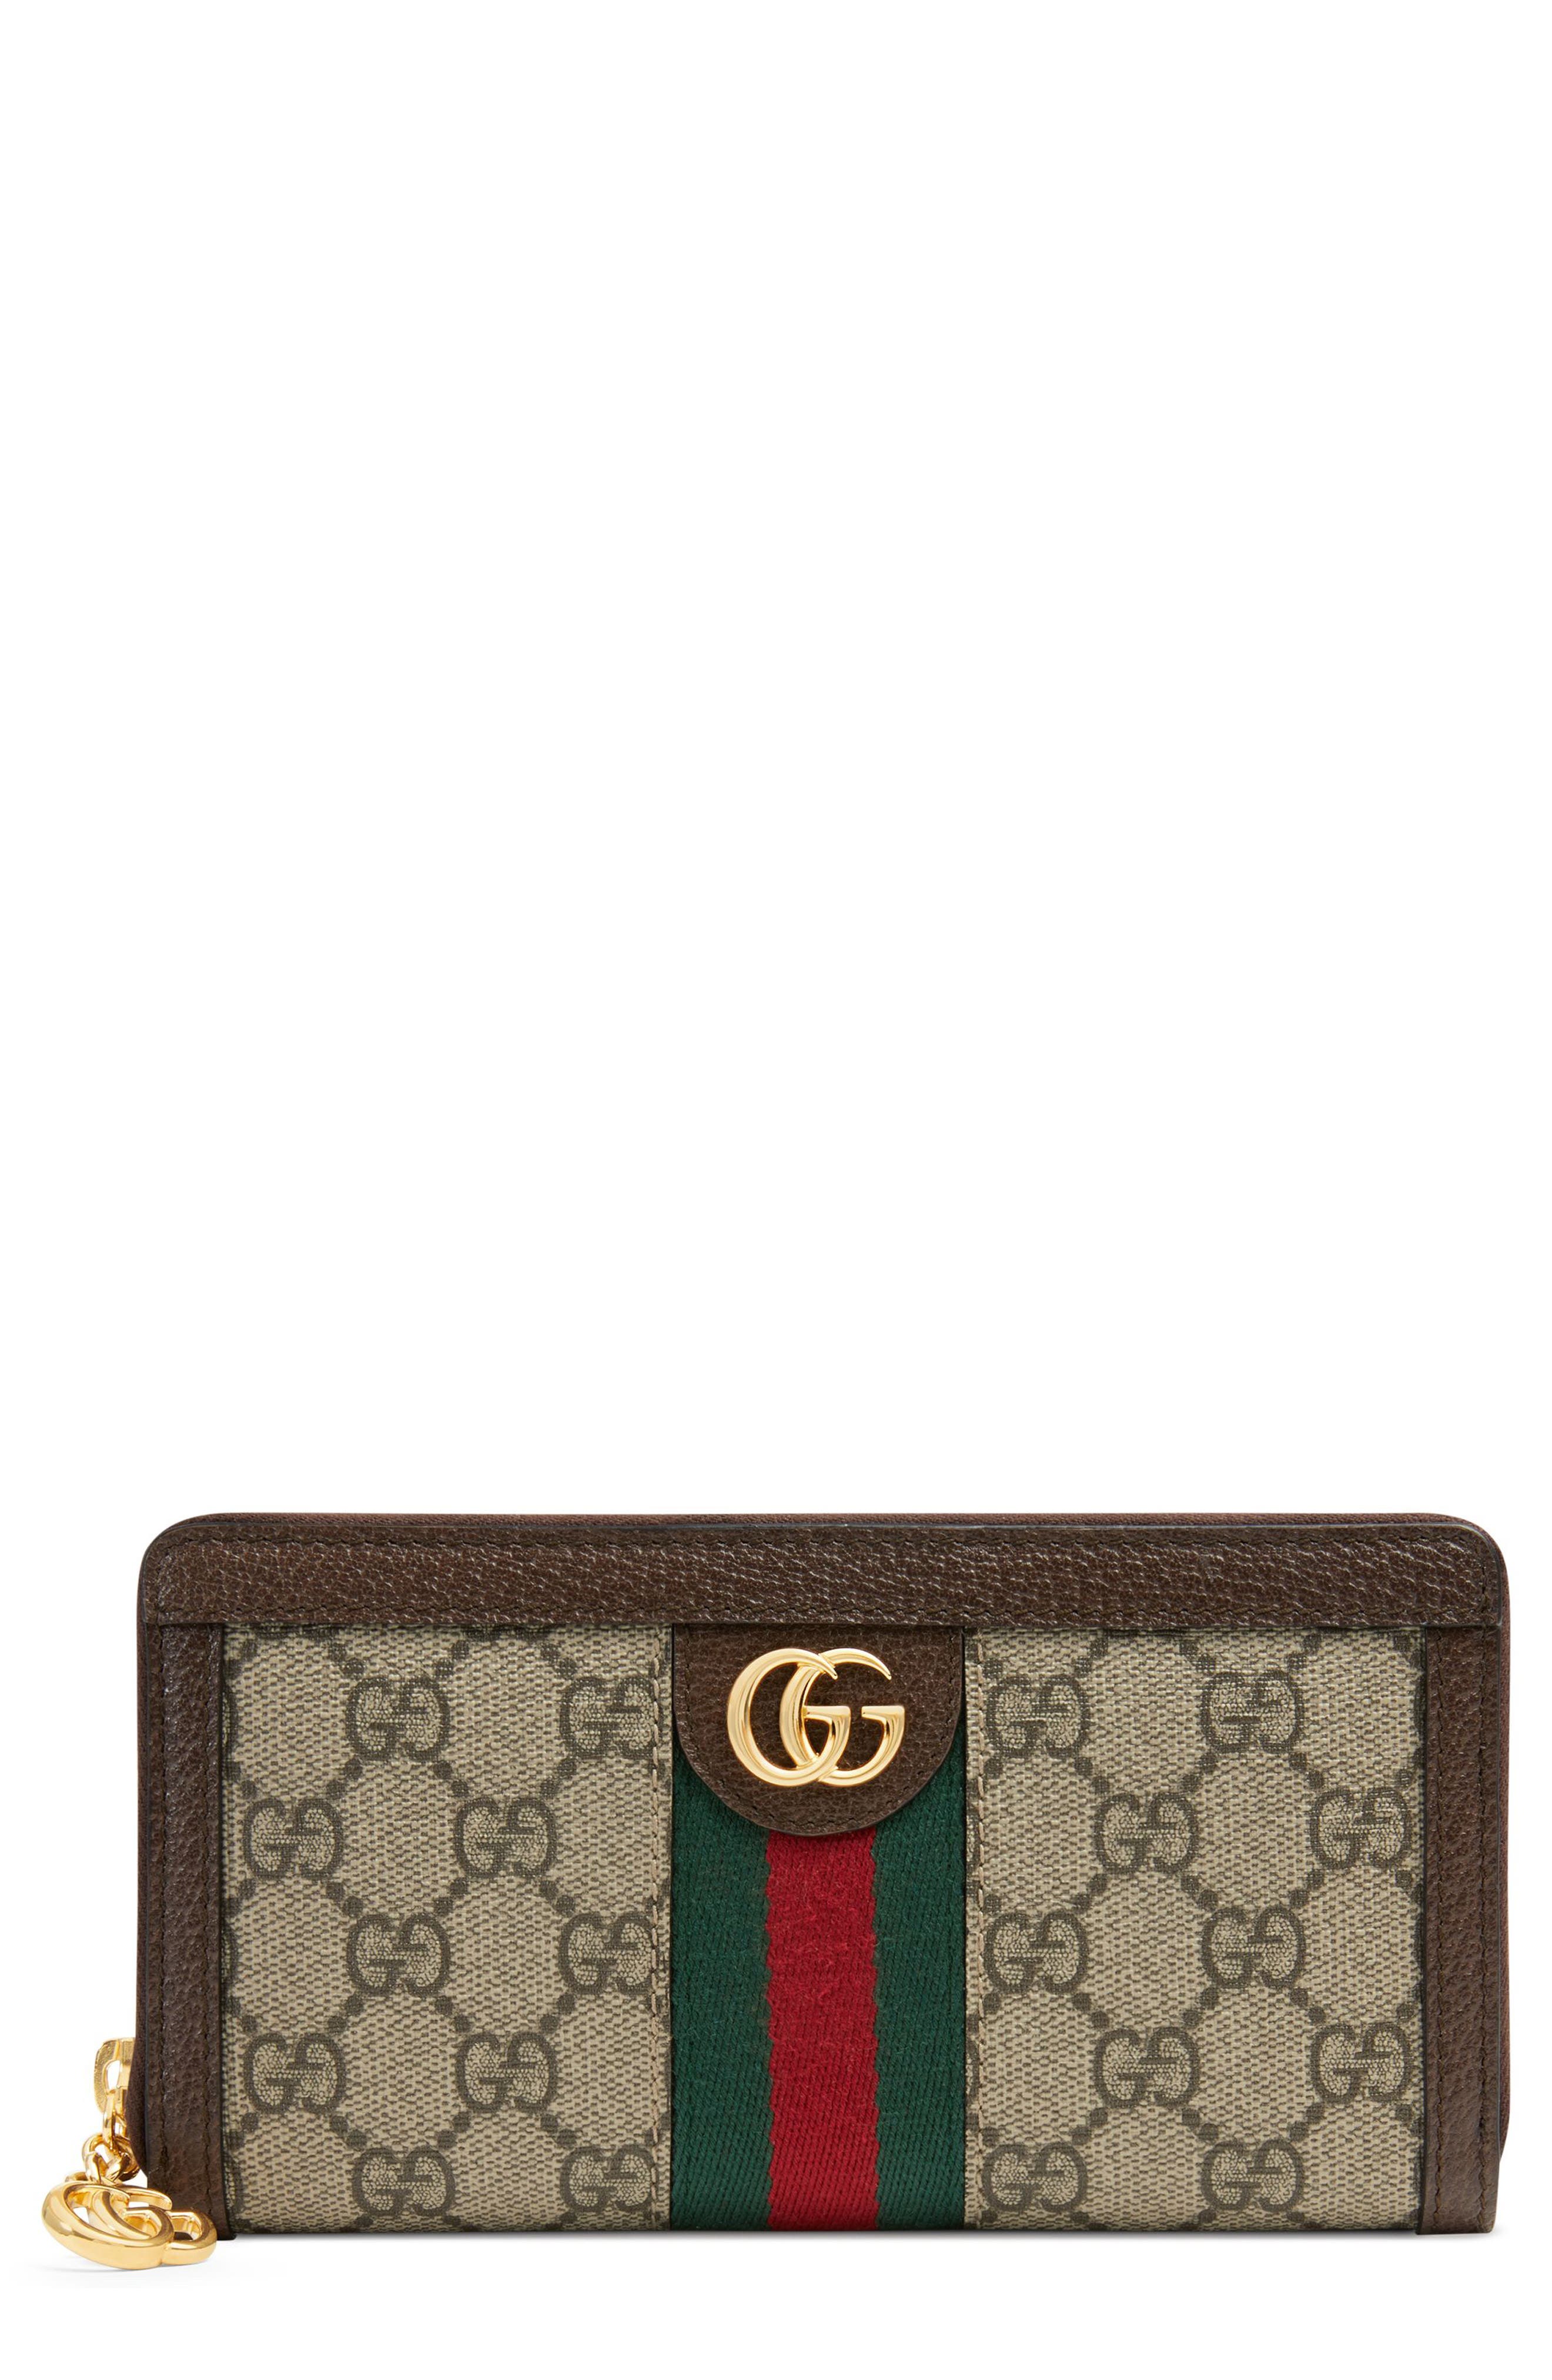 gucci girl wallet